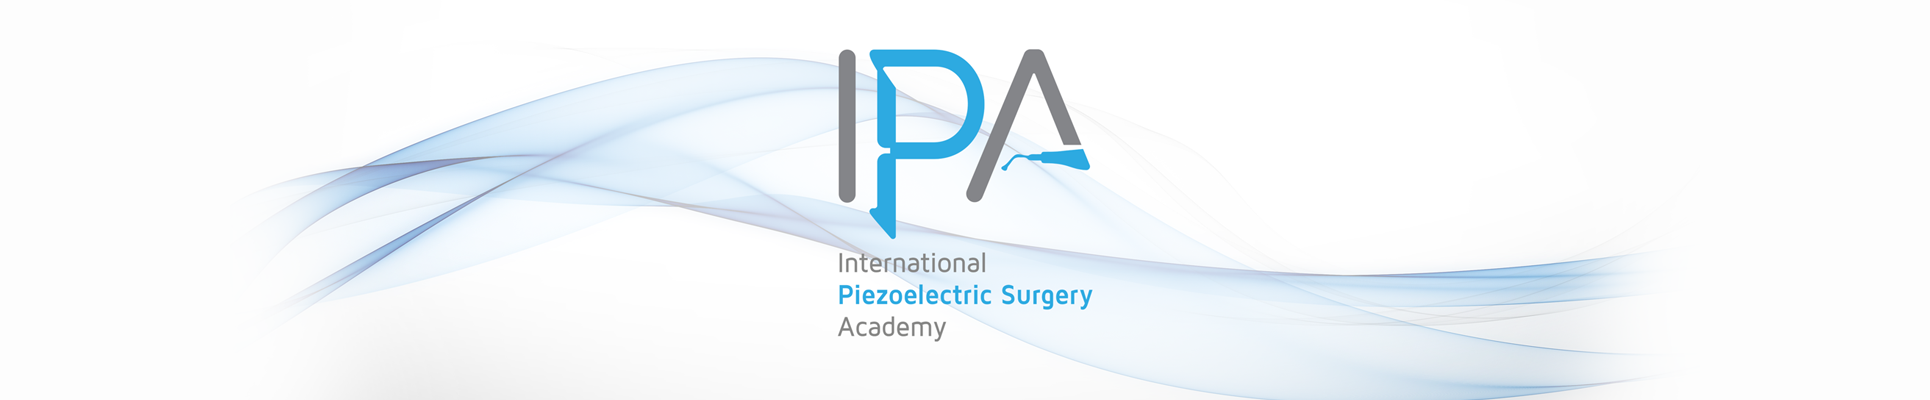 logo-Piezo-Academy-international-surgery-IPA-mercomm